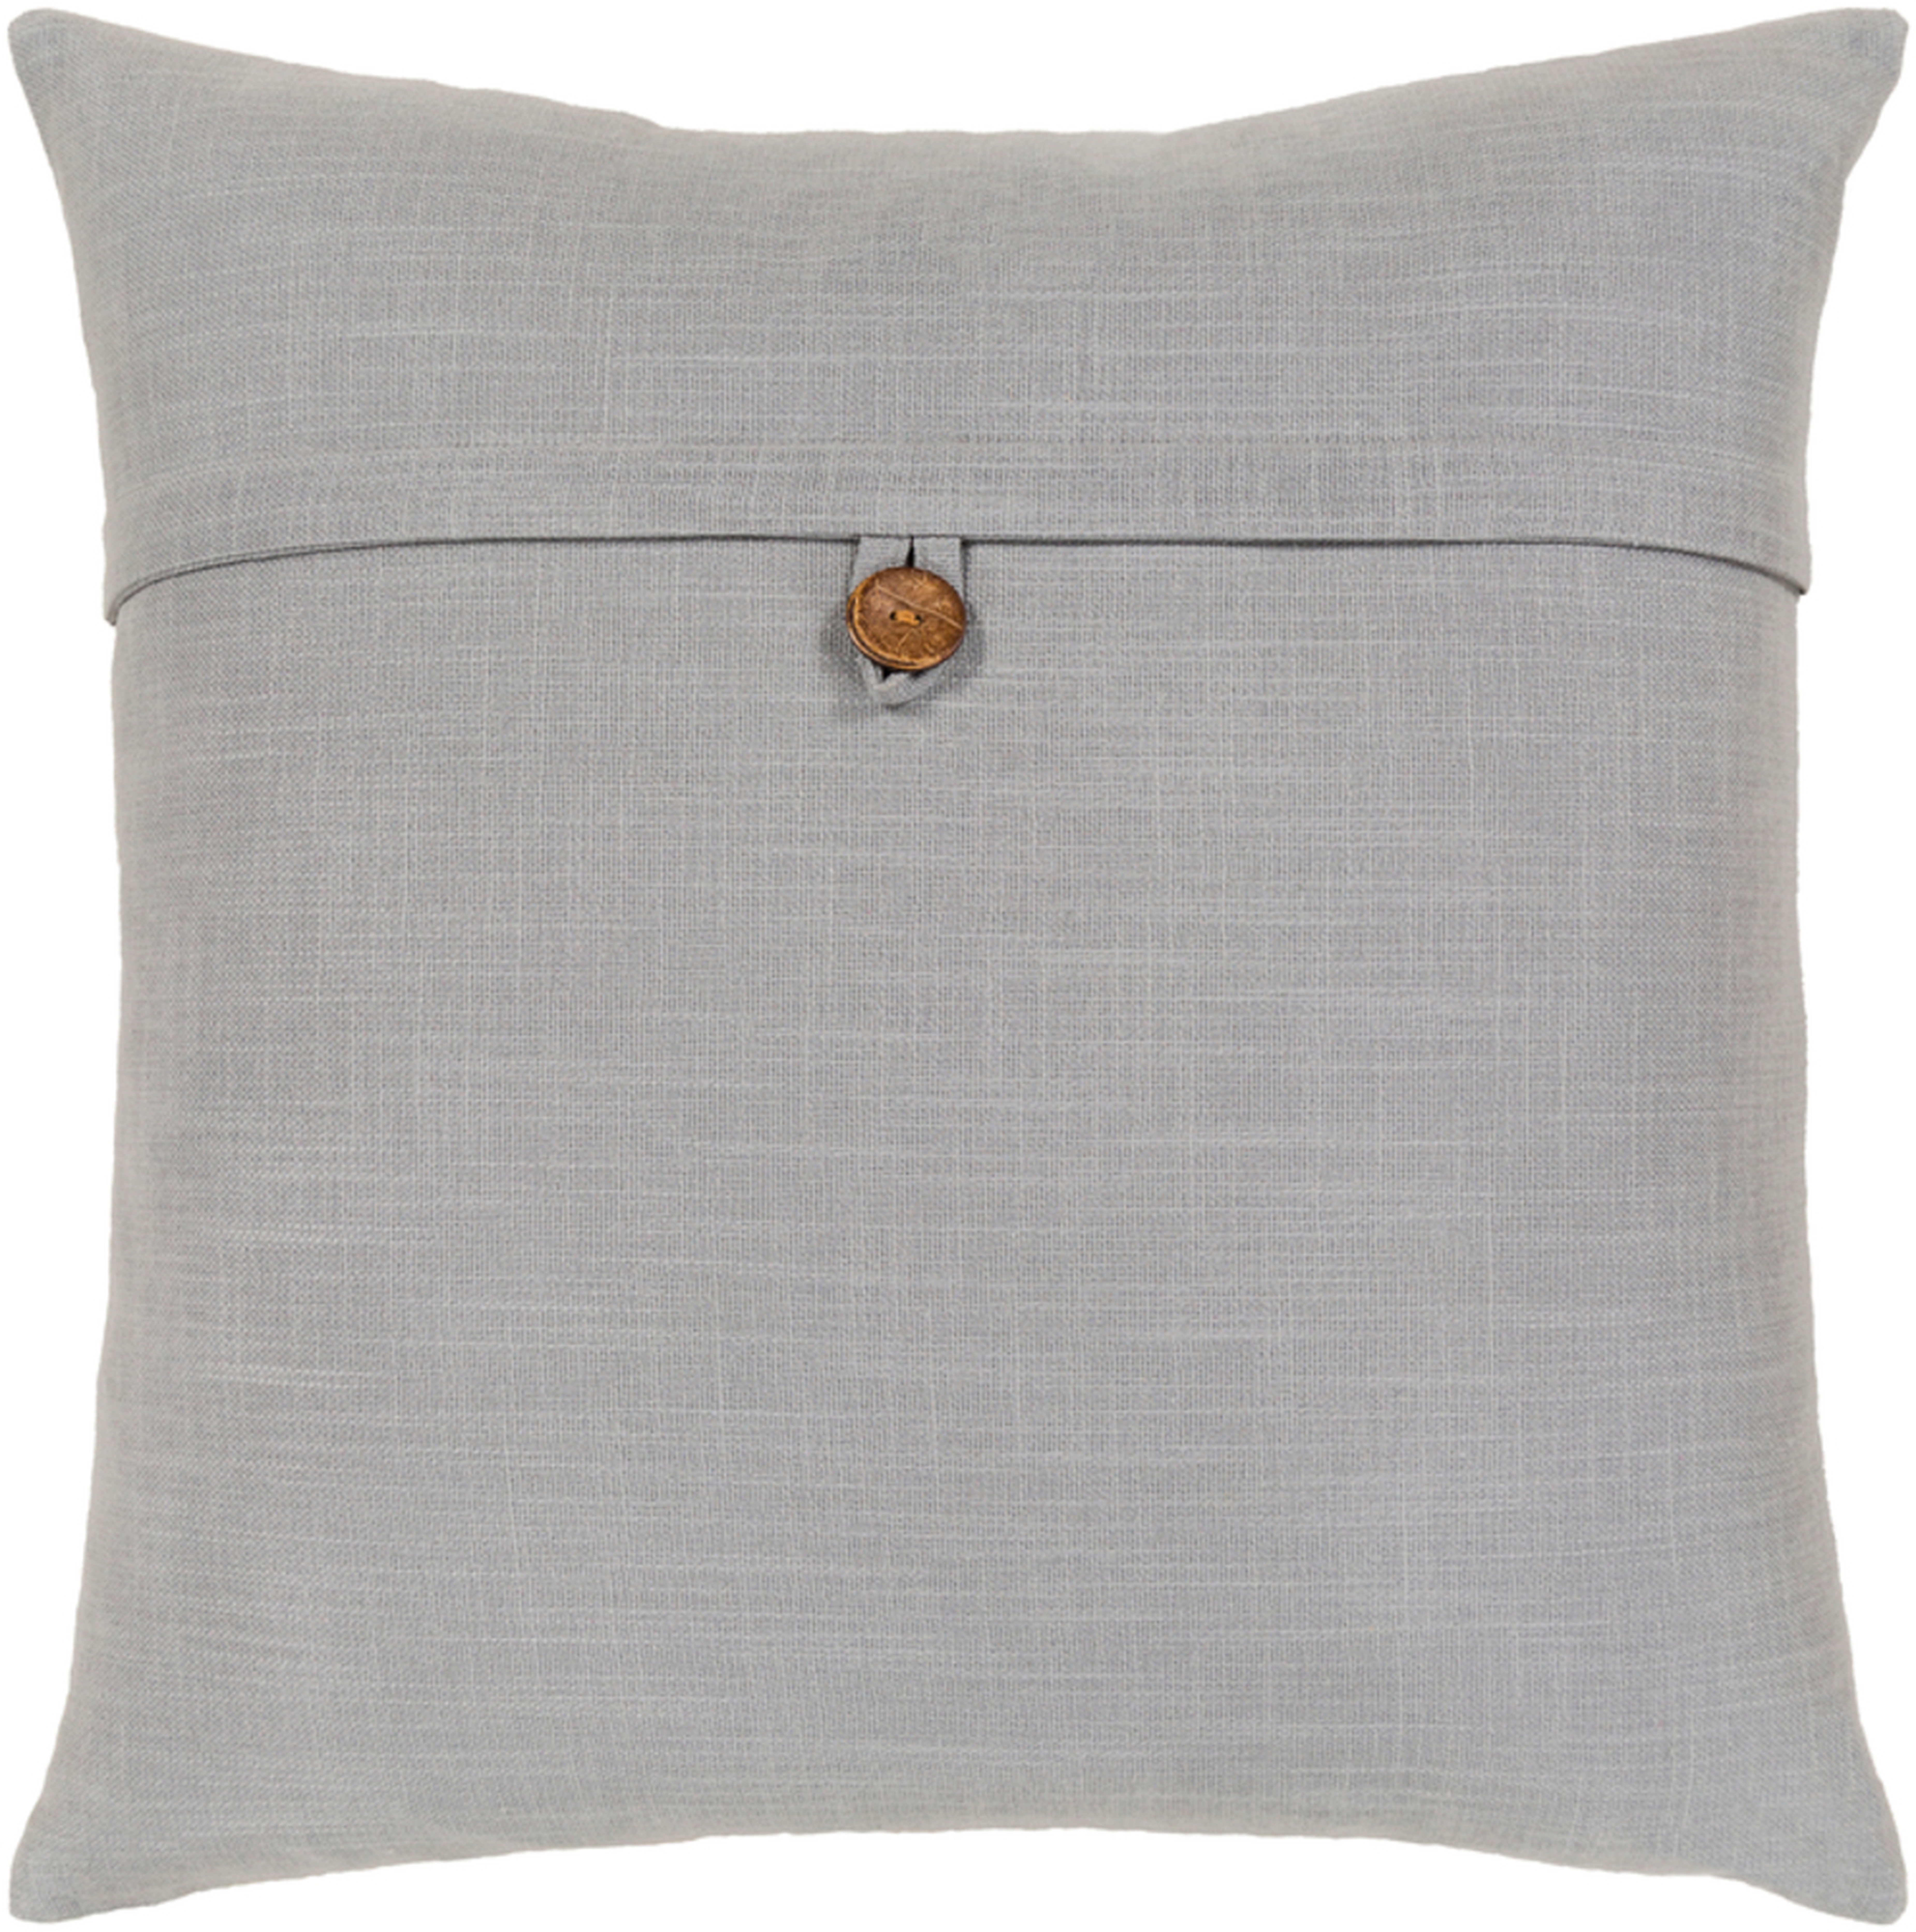 Perine Pillow, 18" x 18", Light Gray - Cove Goods